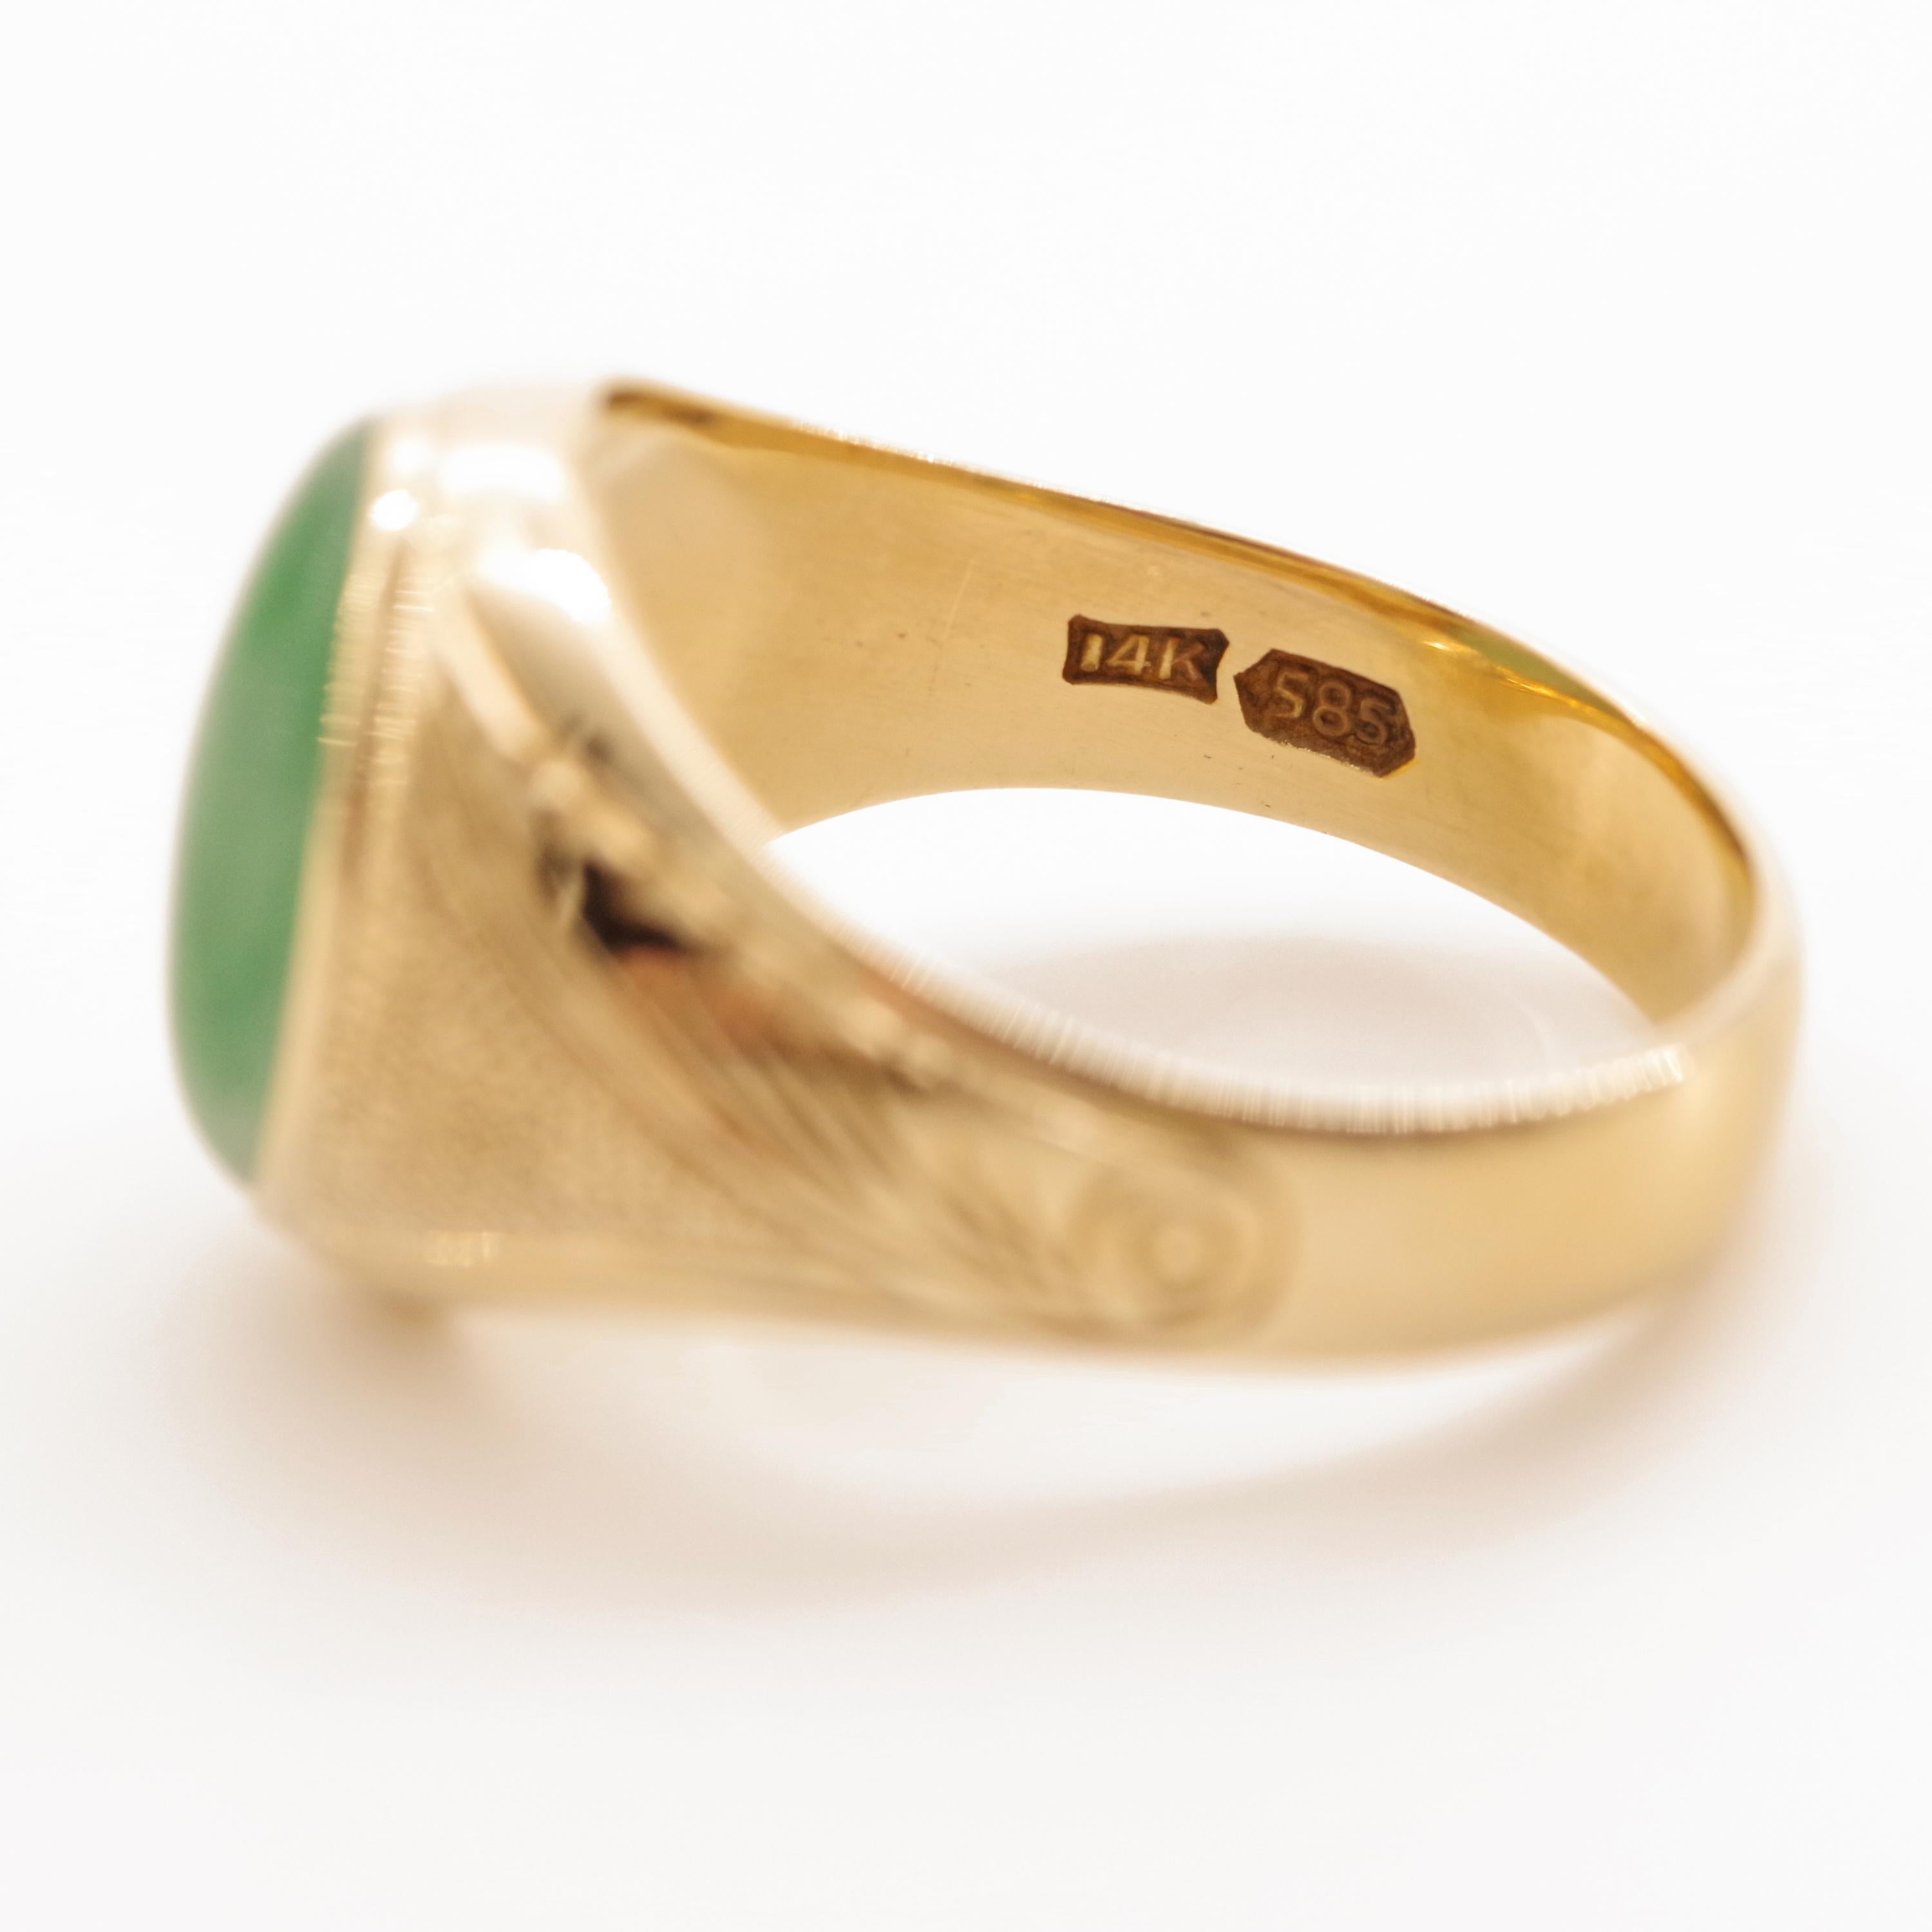 Certified Untreated Men's Jade Ring from Midcentury 5